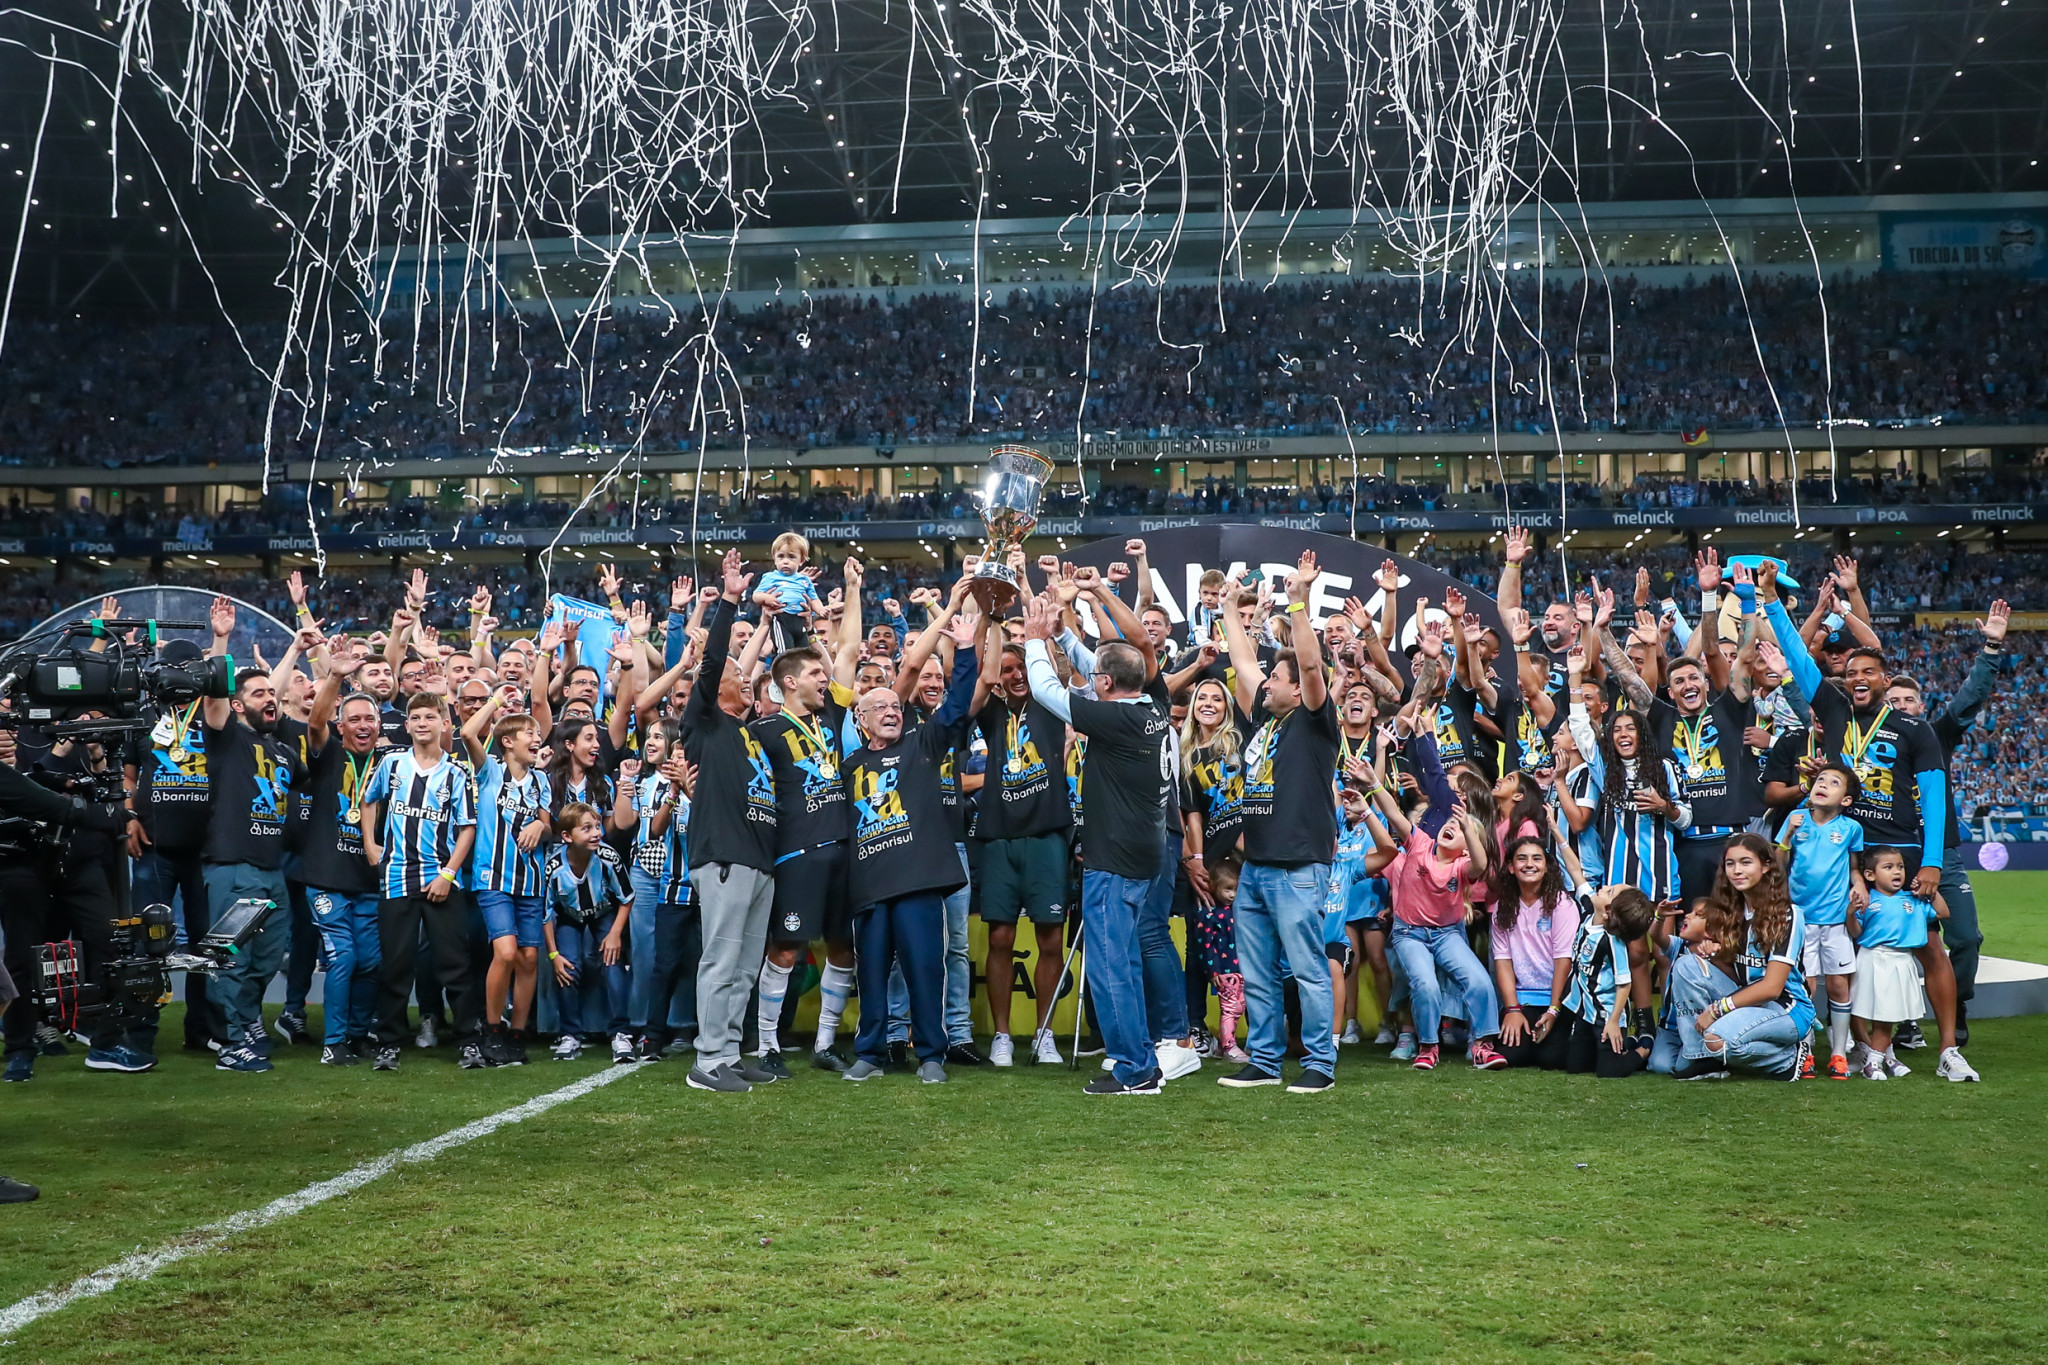 Grêmio - Caxias, Campeonato Gaúcho